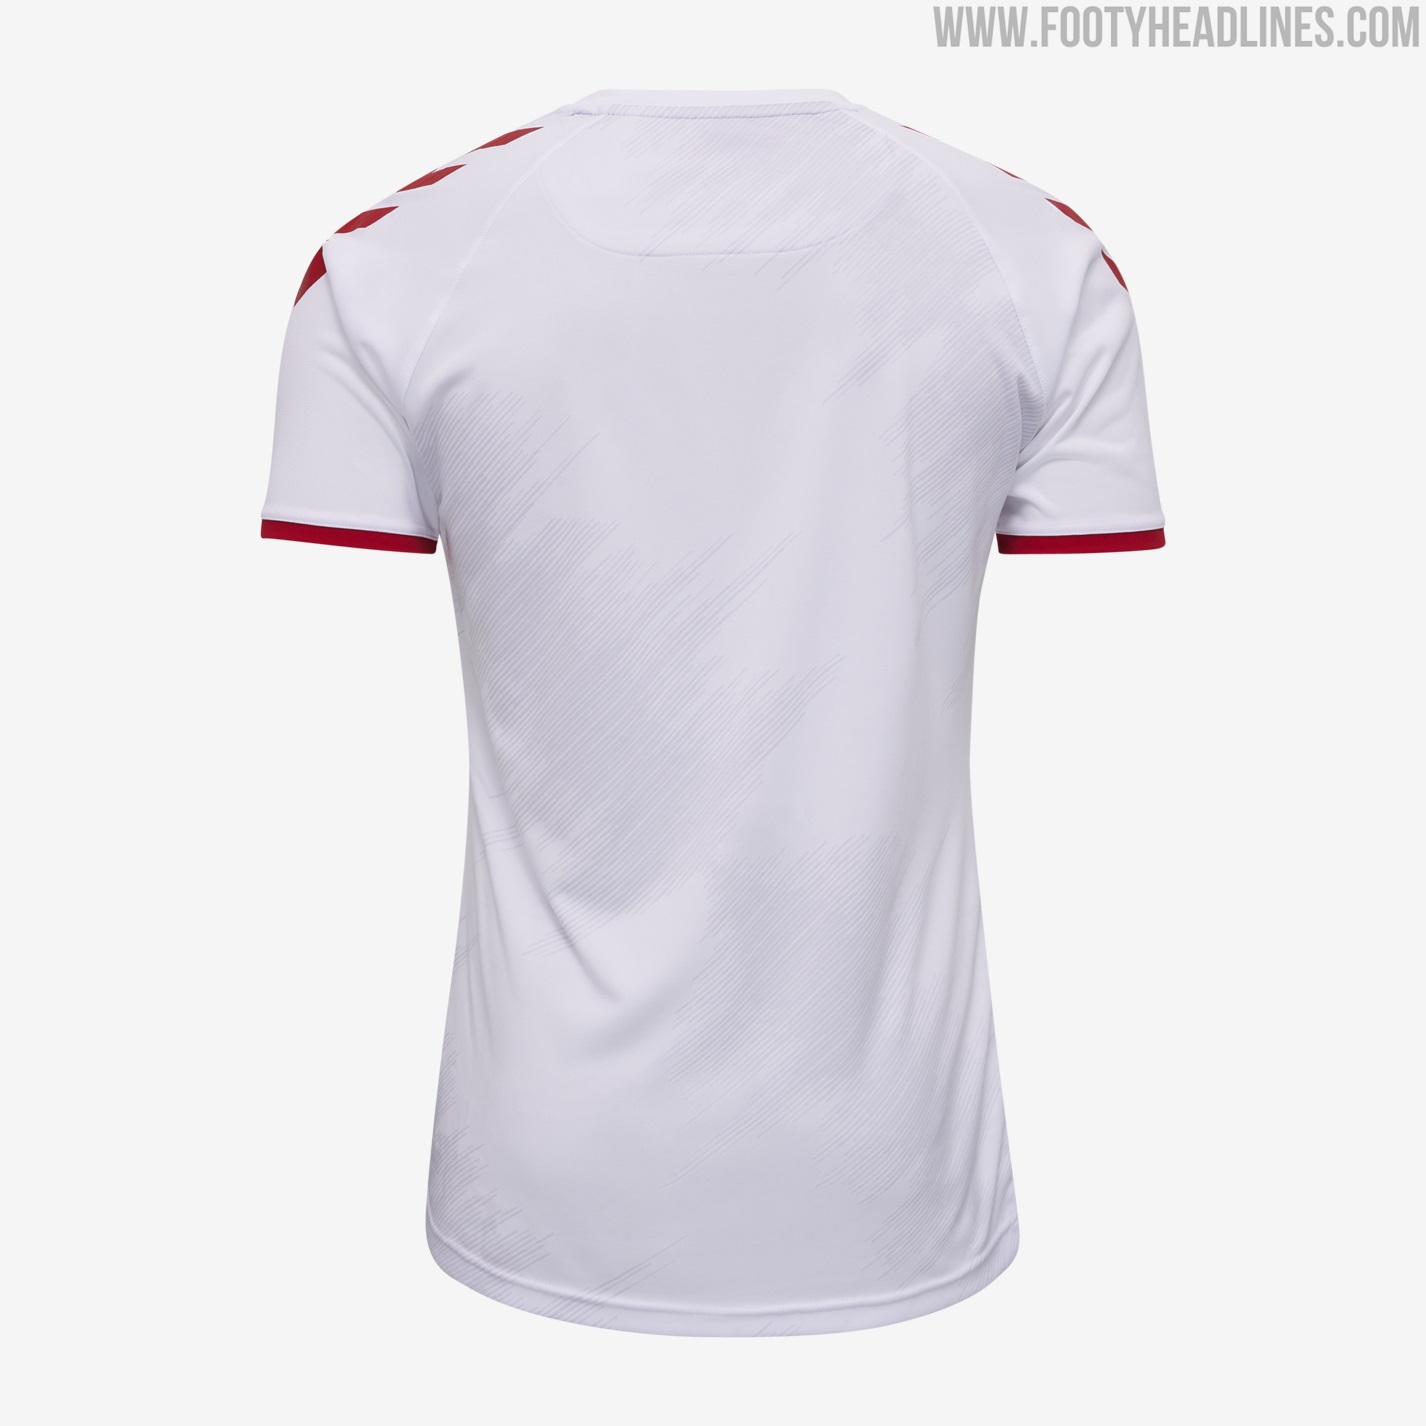 Denmark Euro 2020 Home, Away & Goalkeeper Kits Released - Footy Headlines